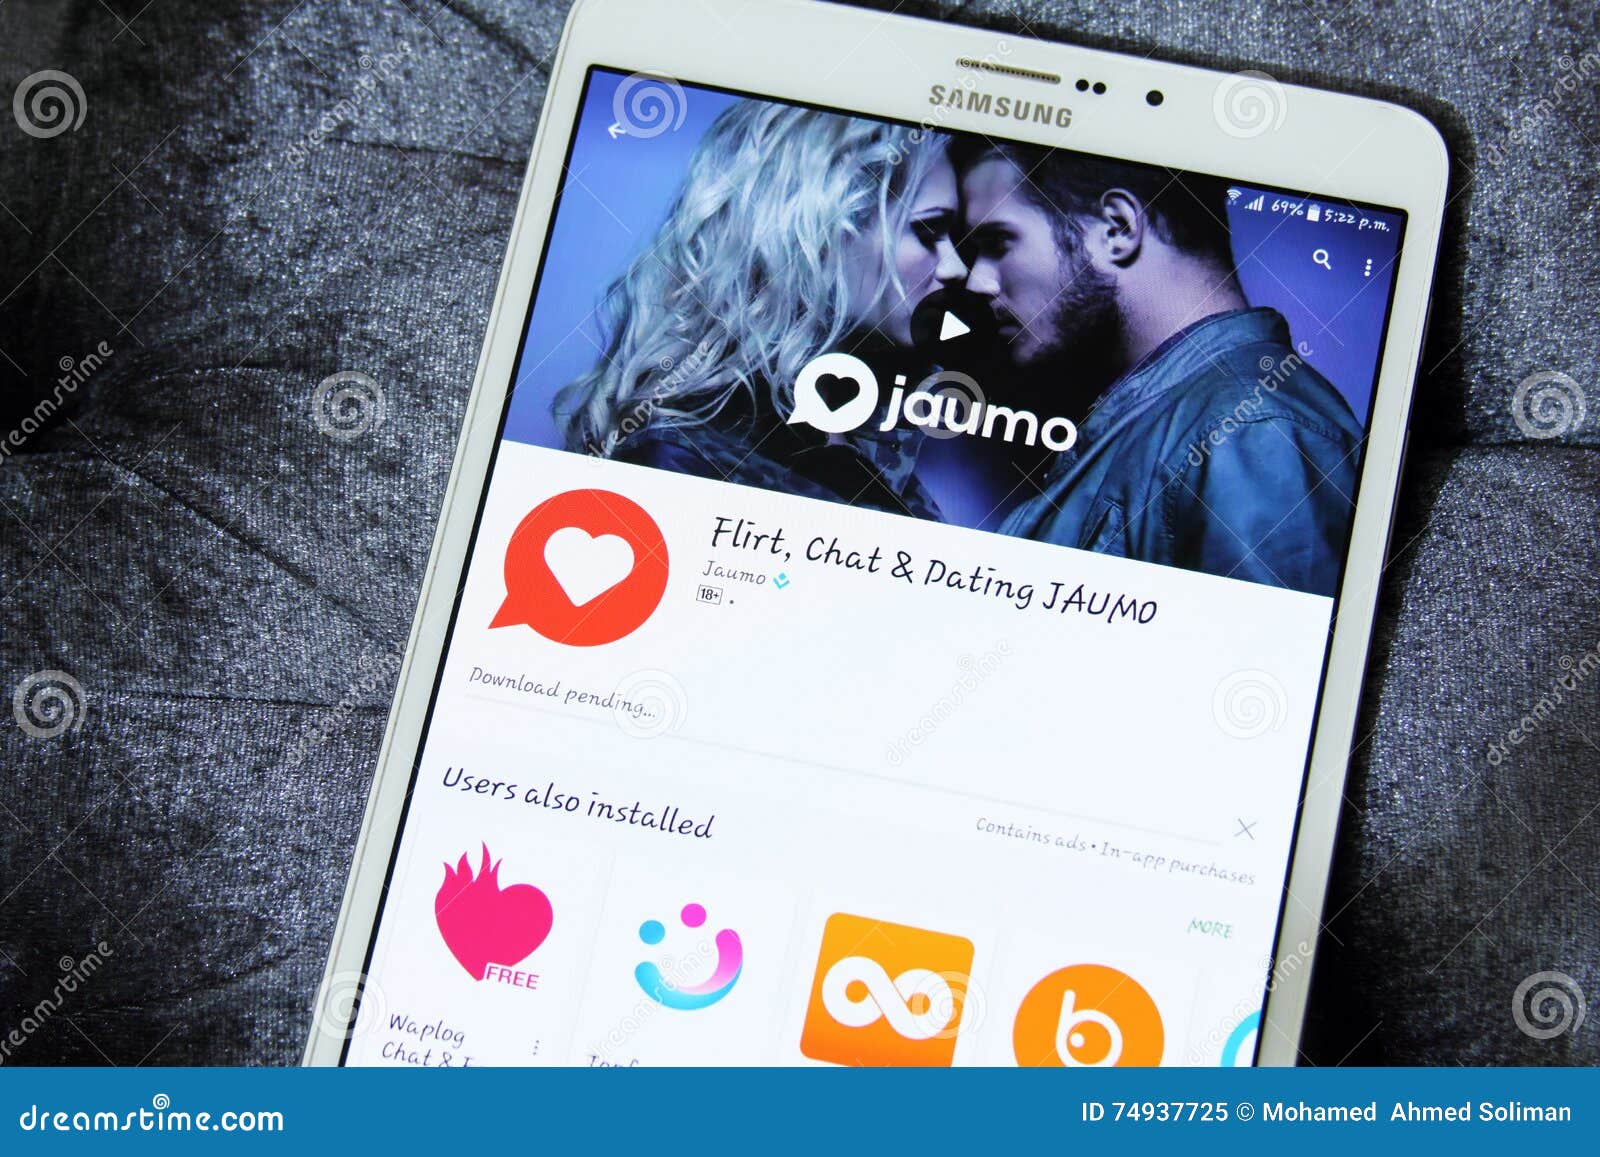 Dating jaumo Jaumo review